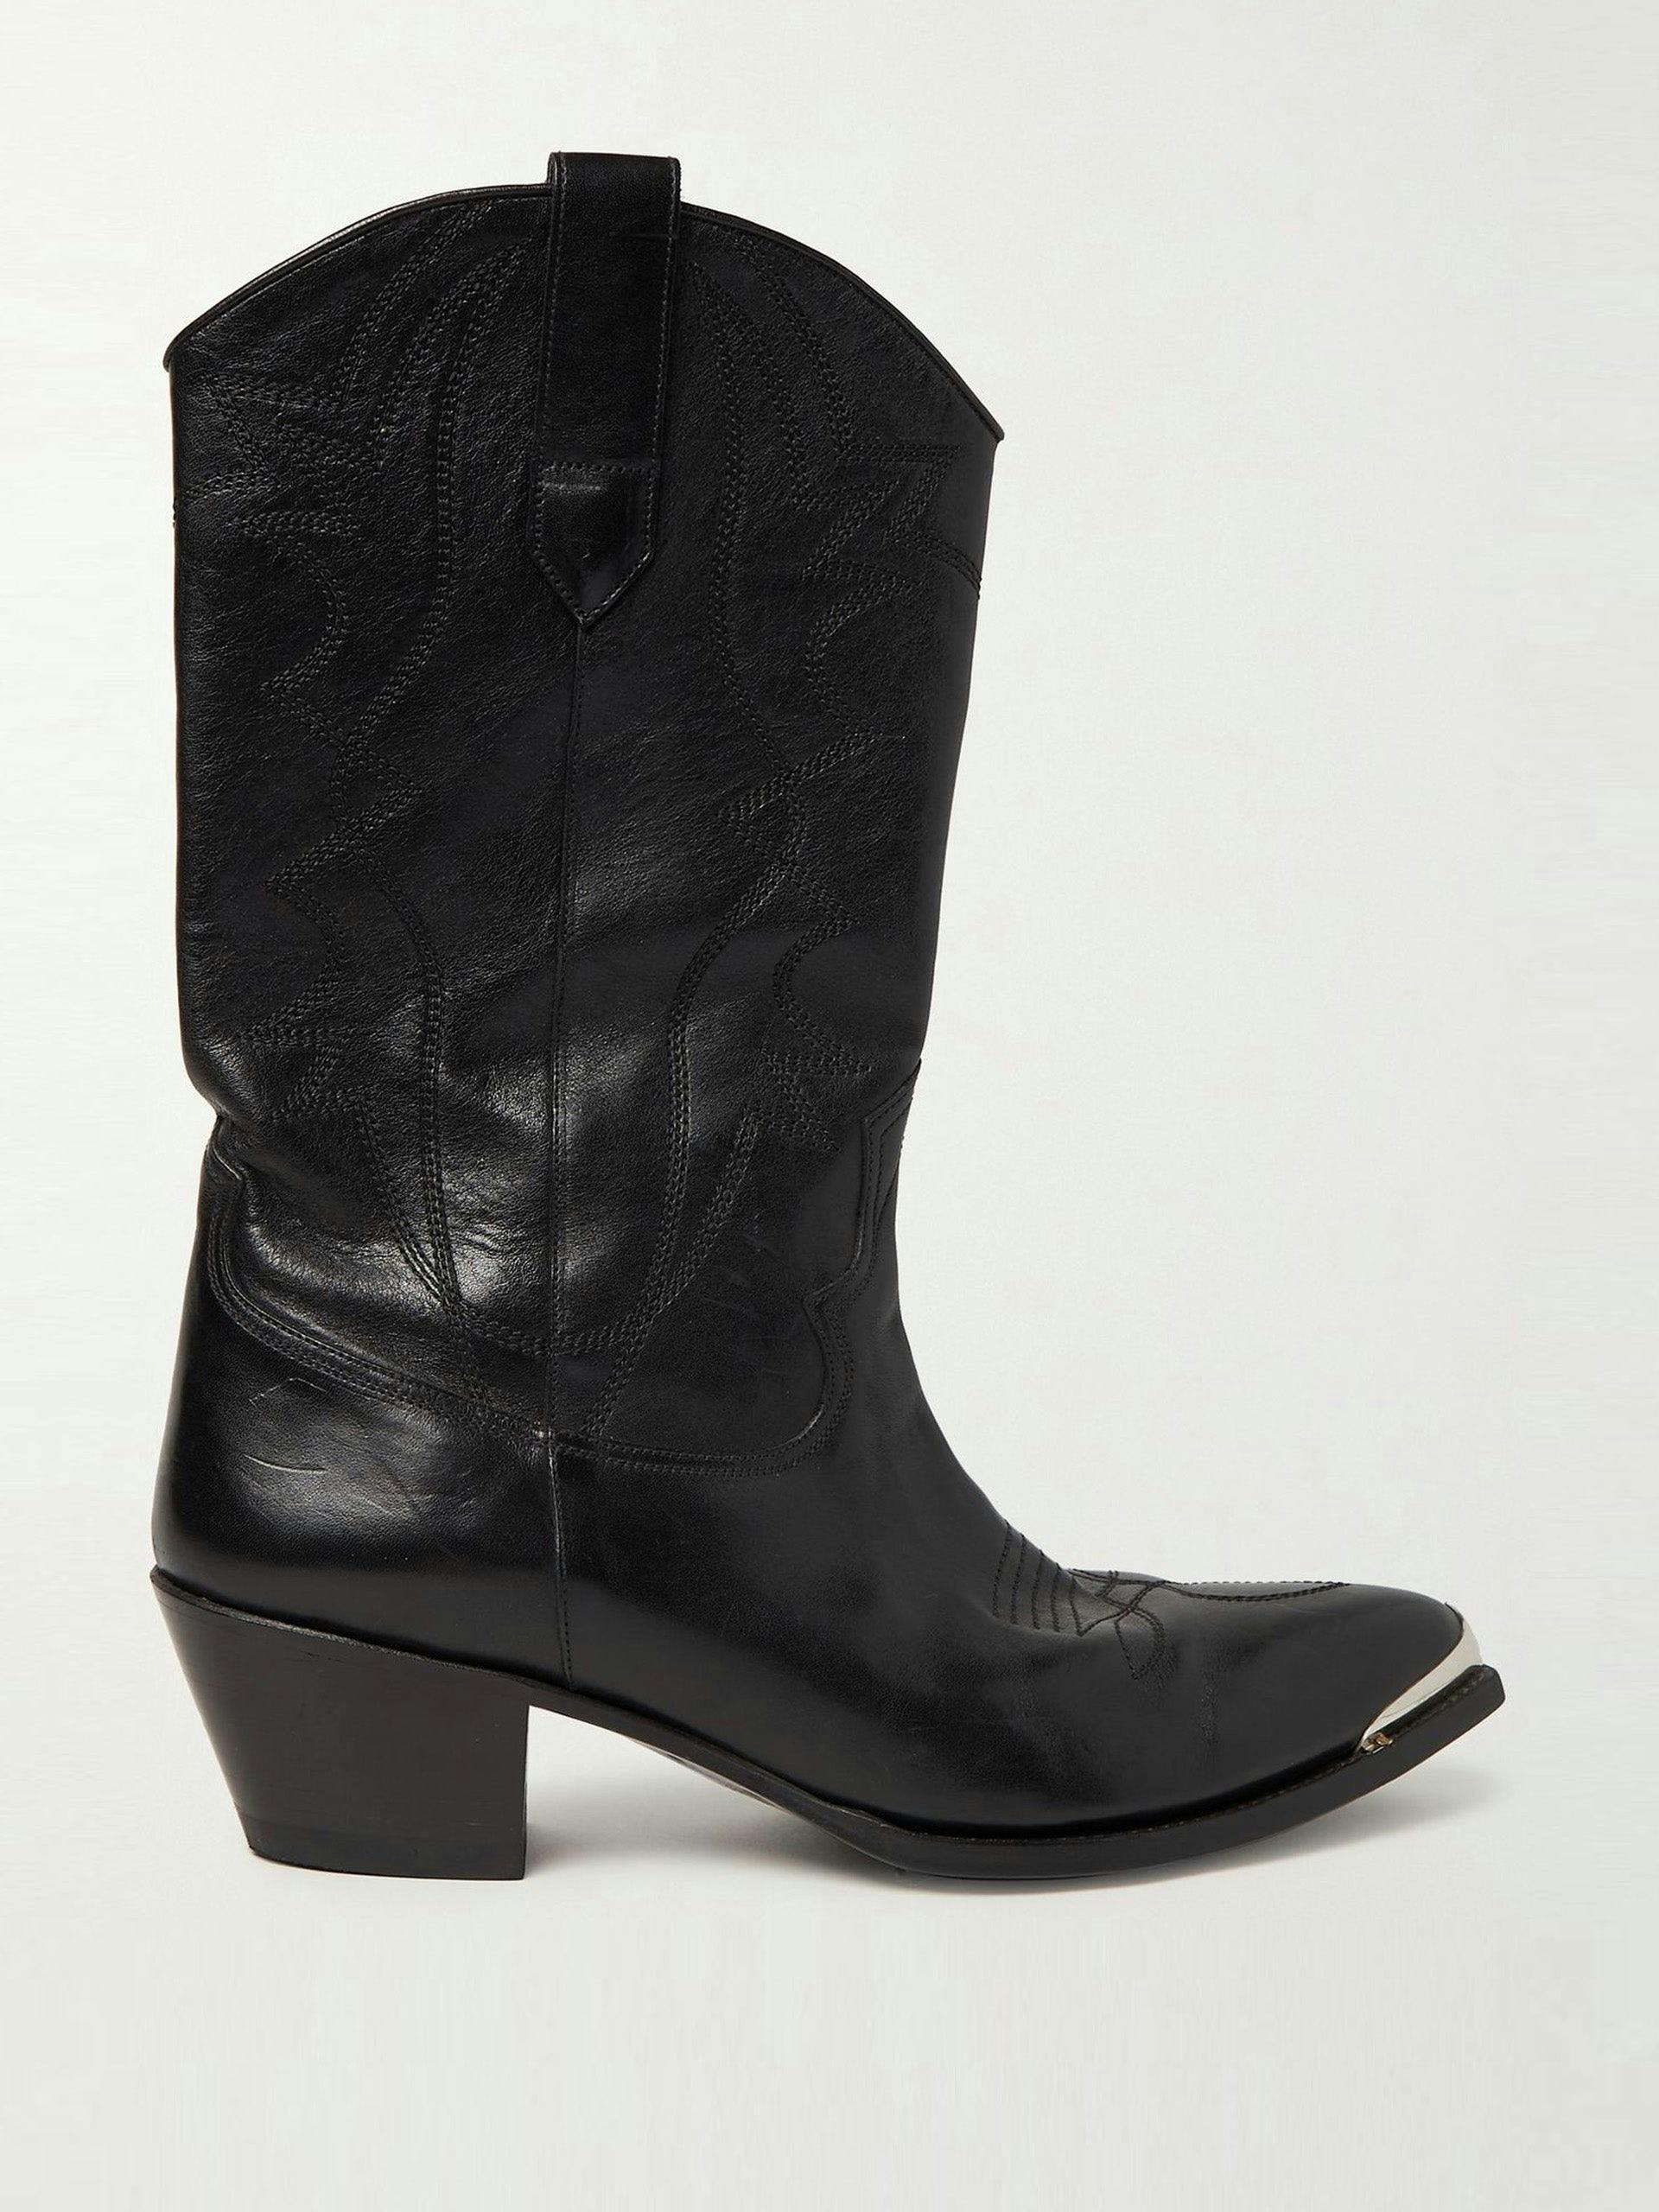 Black embellished leather Western boots